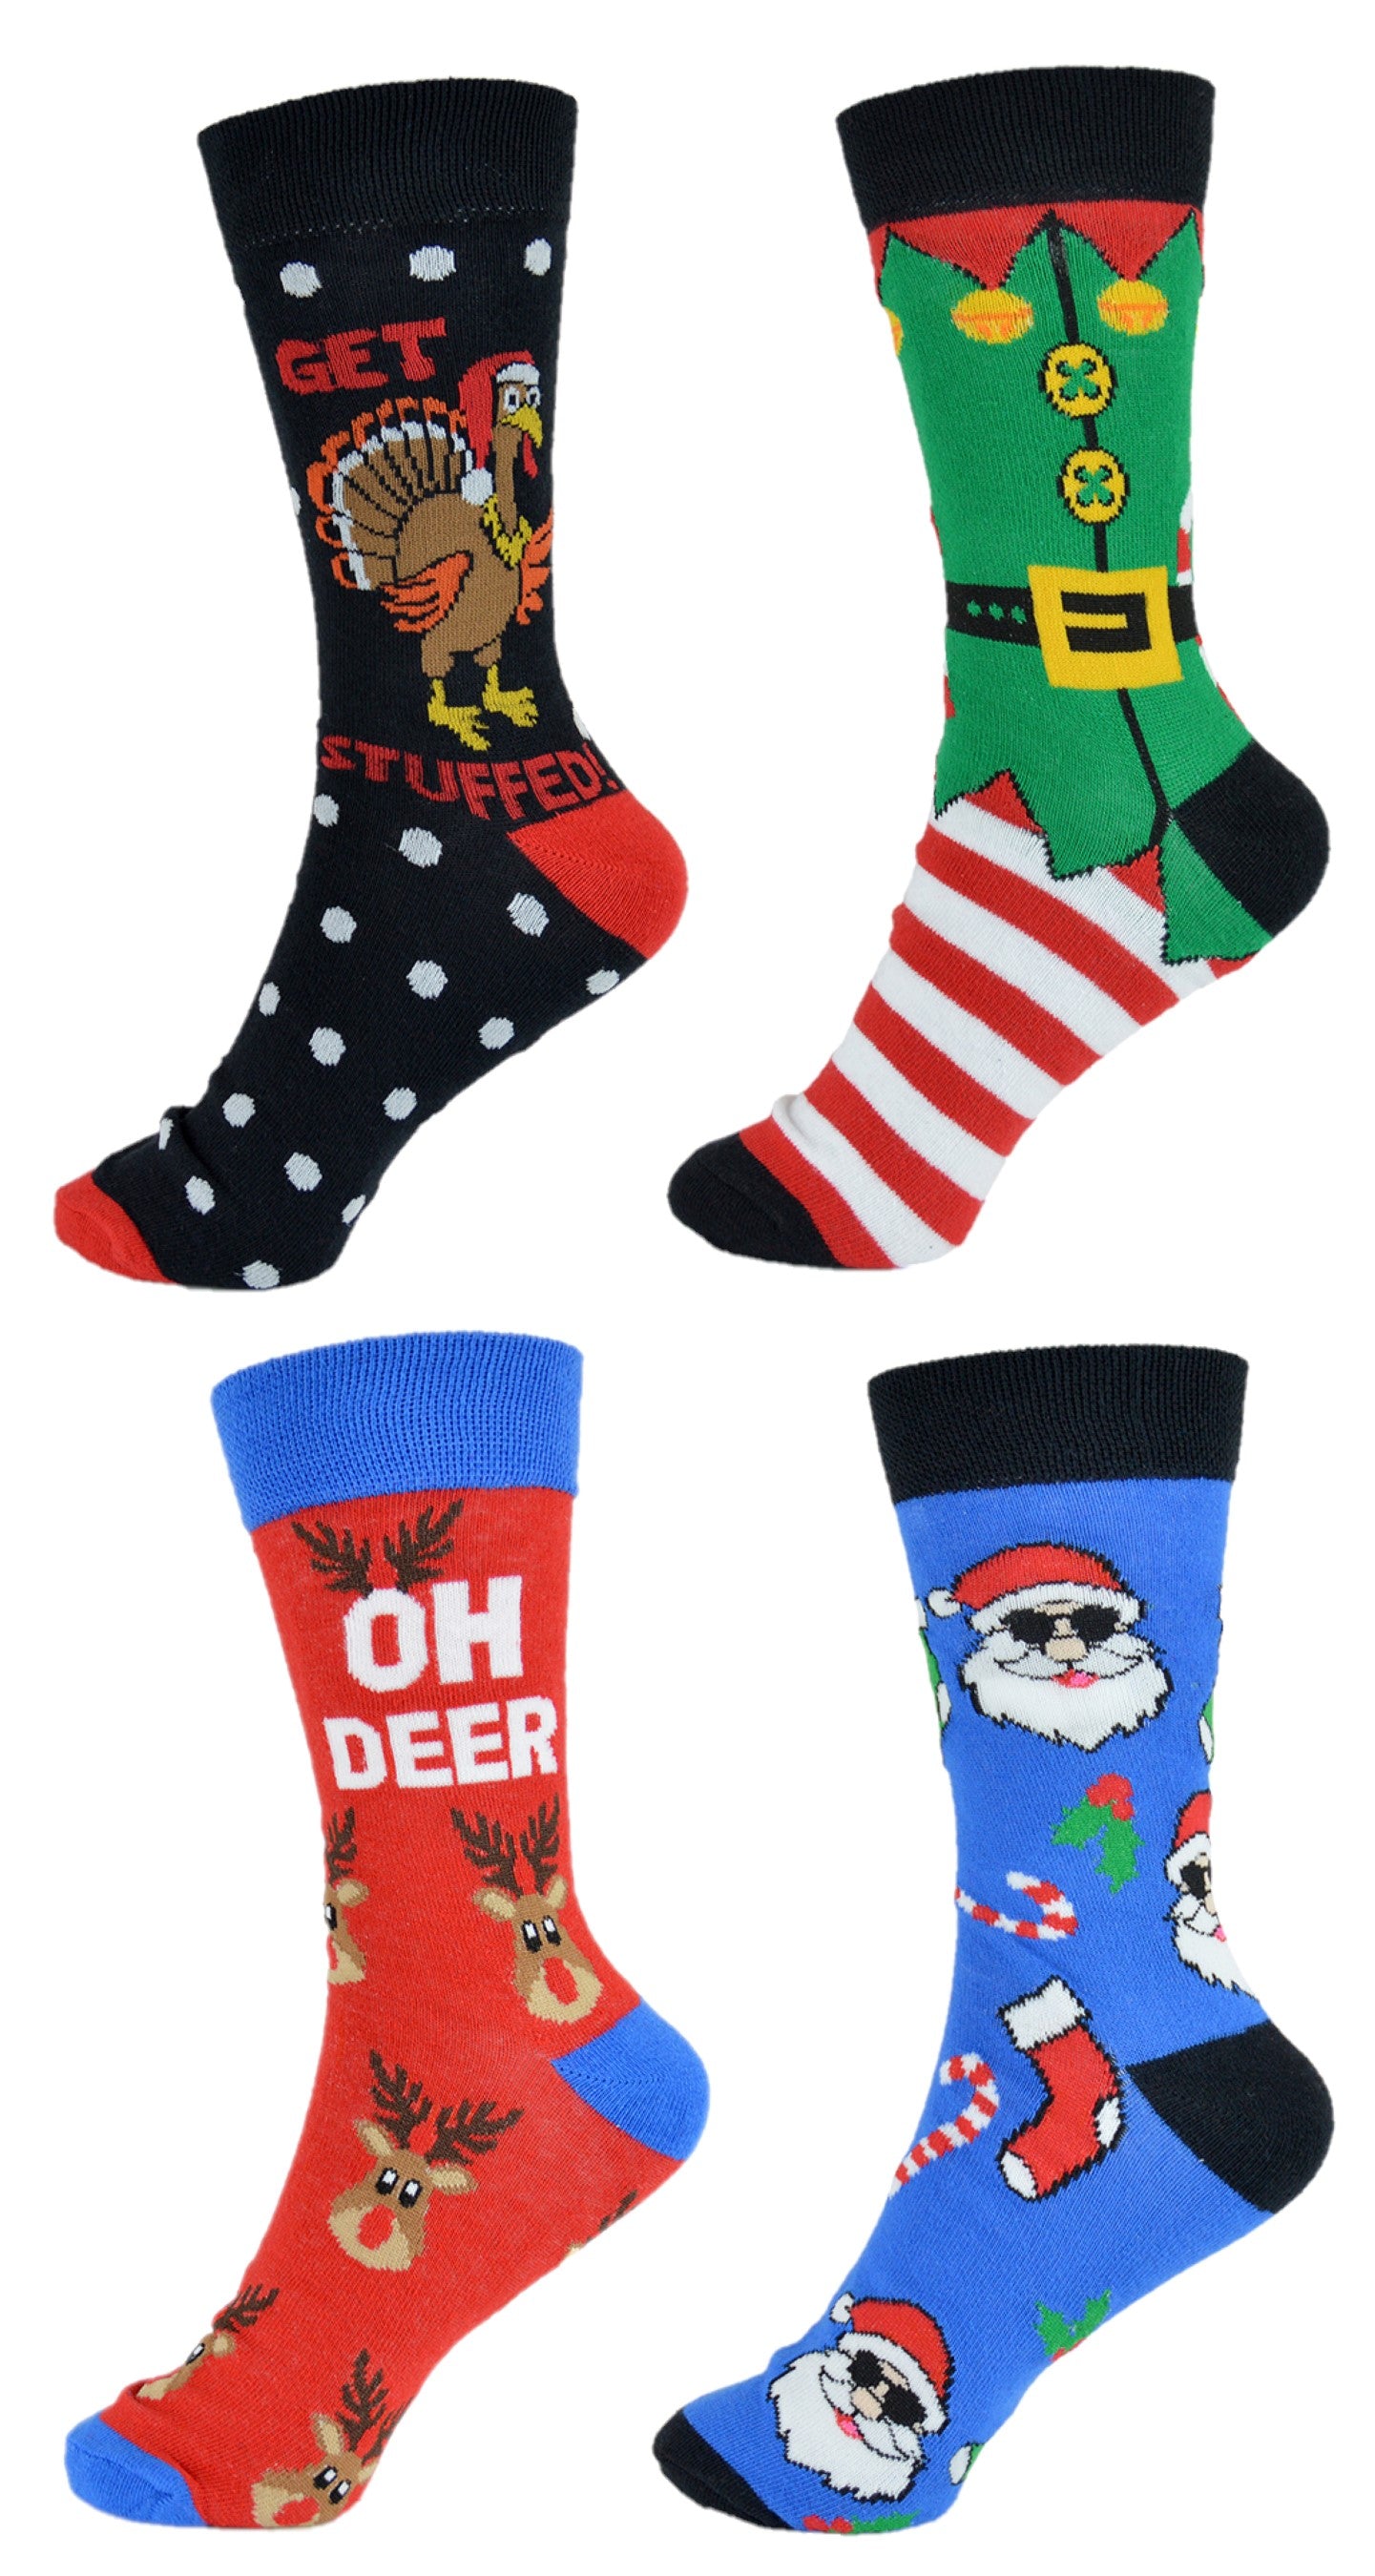 4 Pairs Mens Christmas Patterned Cotton Rich Socks Festive Designs